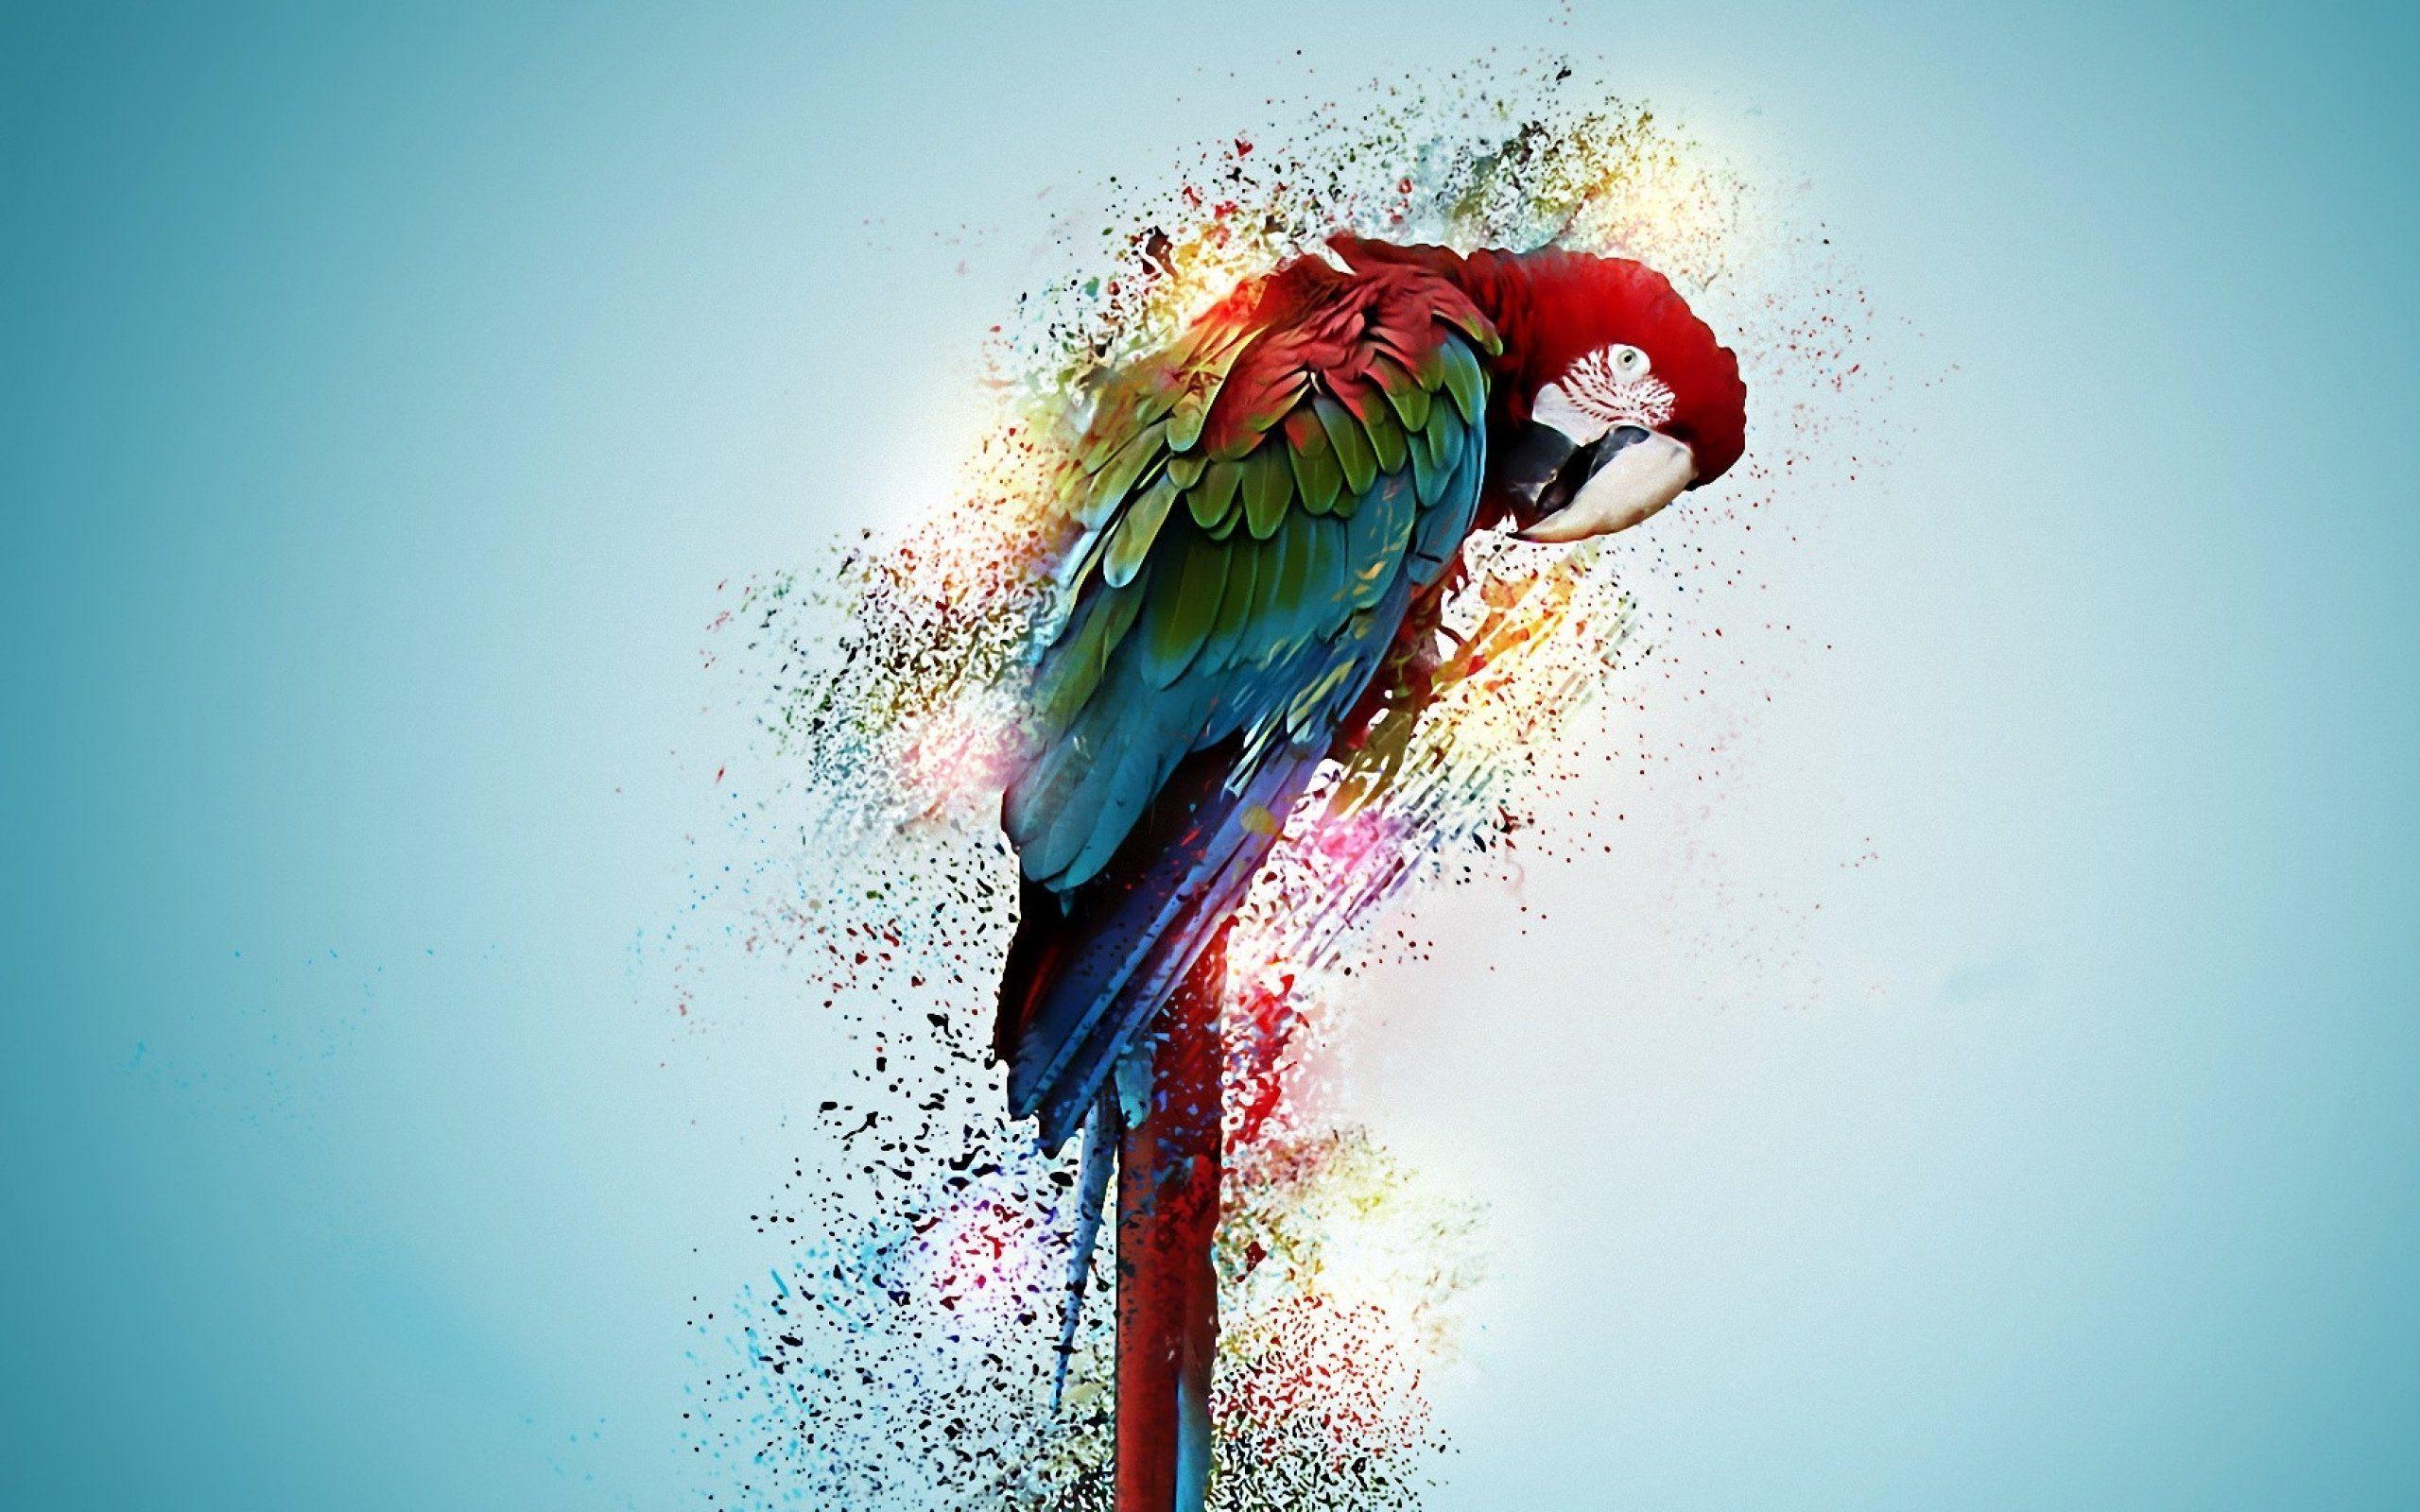 6 parrot HD wallpapers | Desktop backgrounds, 5K, 4K, UHD